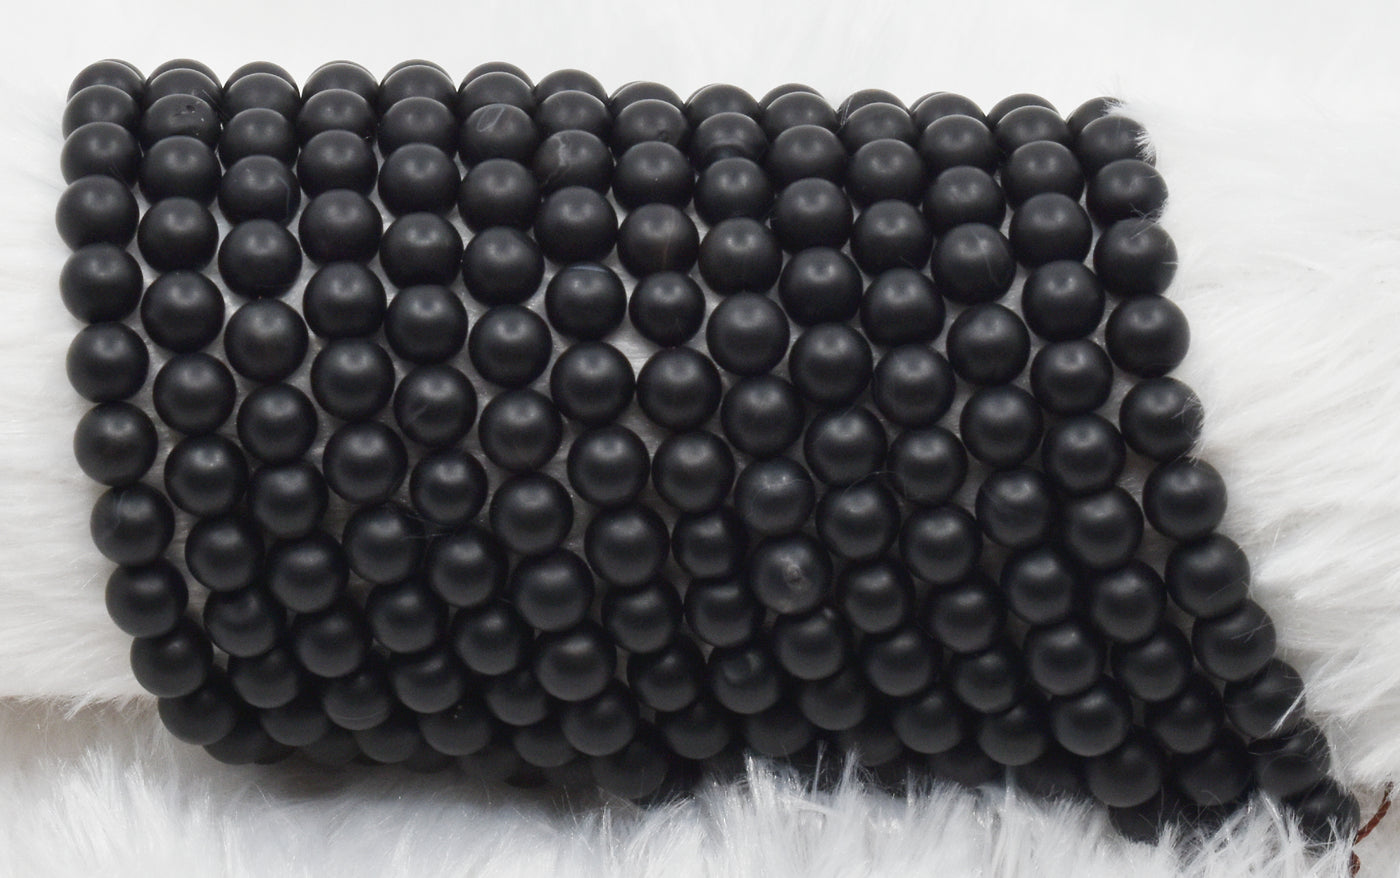 Matt Black Onyx Beads, Natural Round Crystal Beads 6mm to 10mm